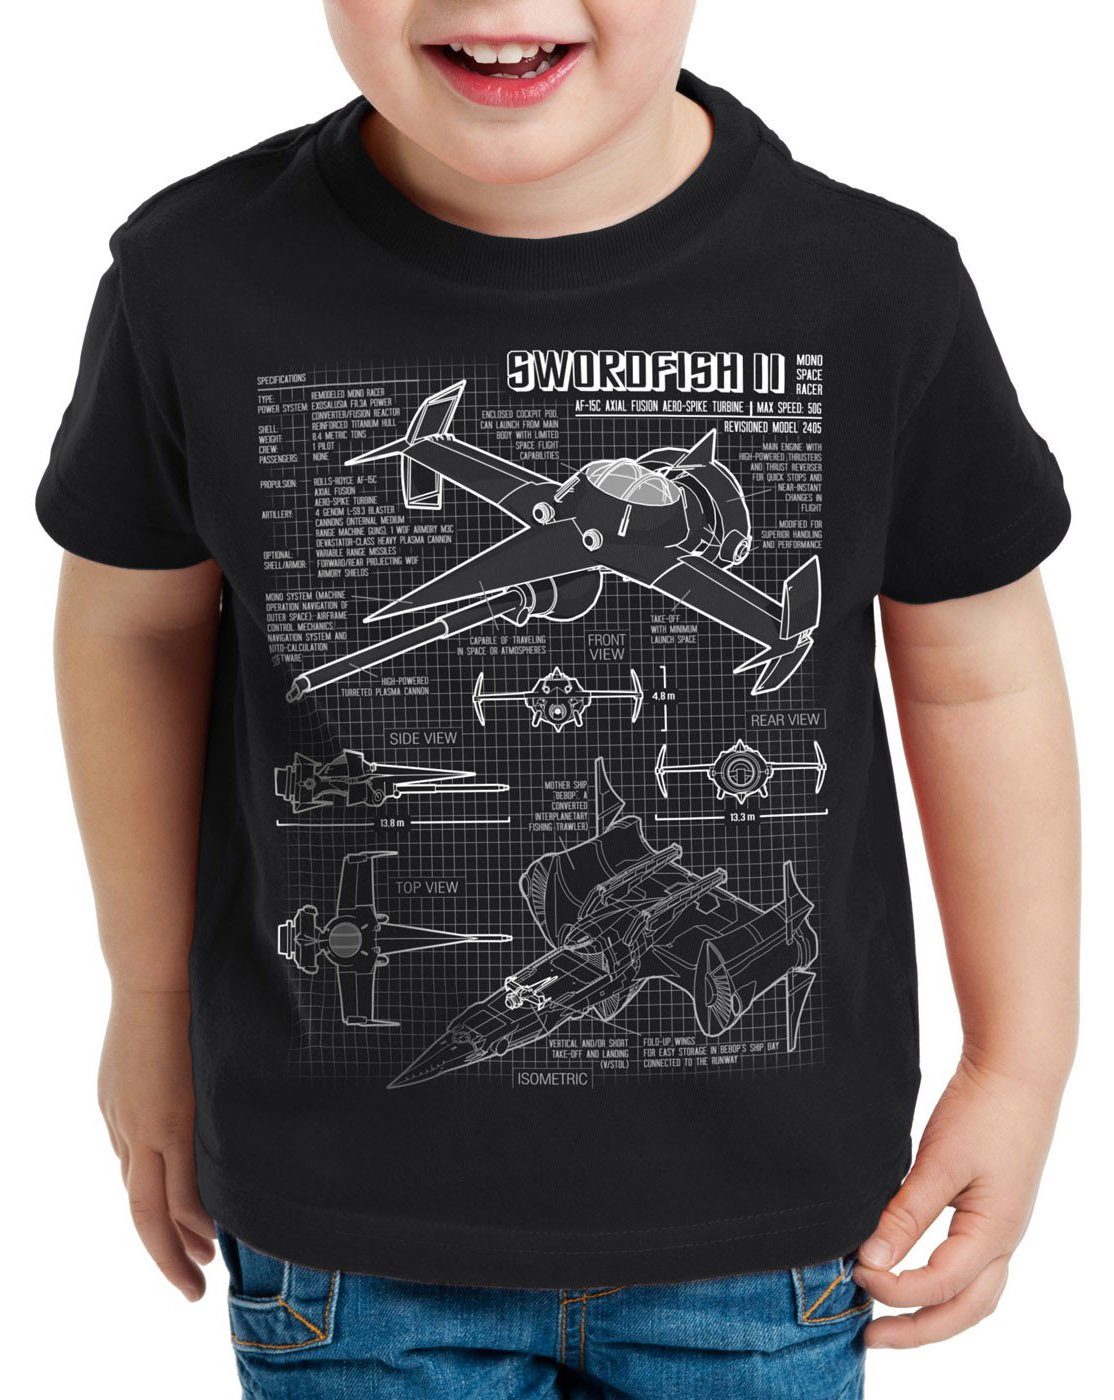 Weltweit style3 Print-Shirt Kinder T-Shirt racer Bebop schwarz Swordfish II cowboy mono